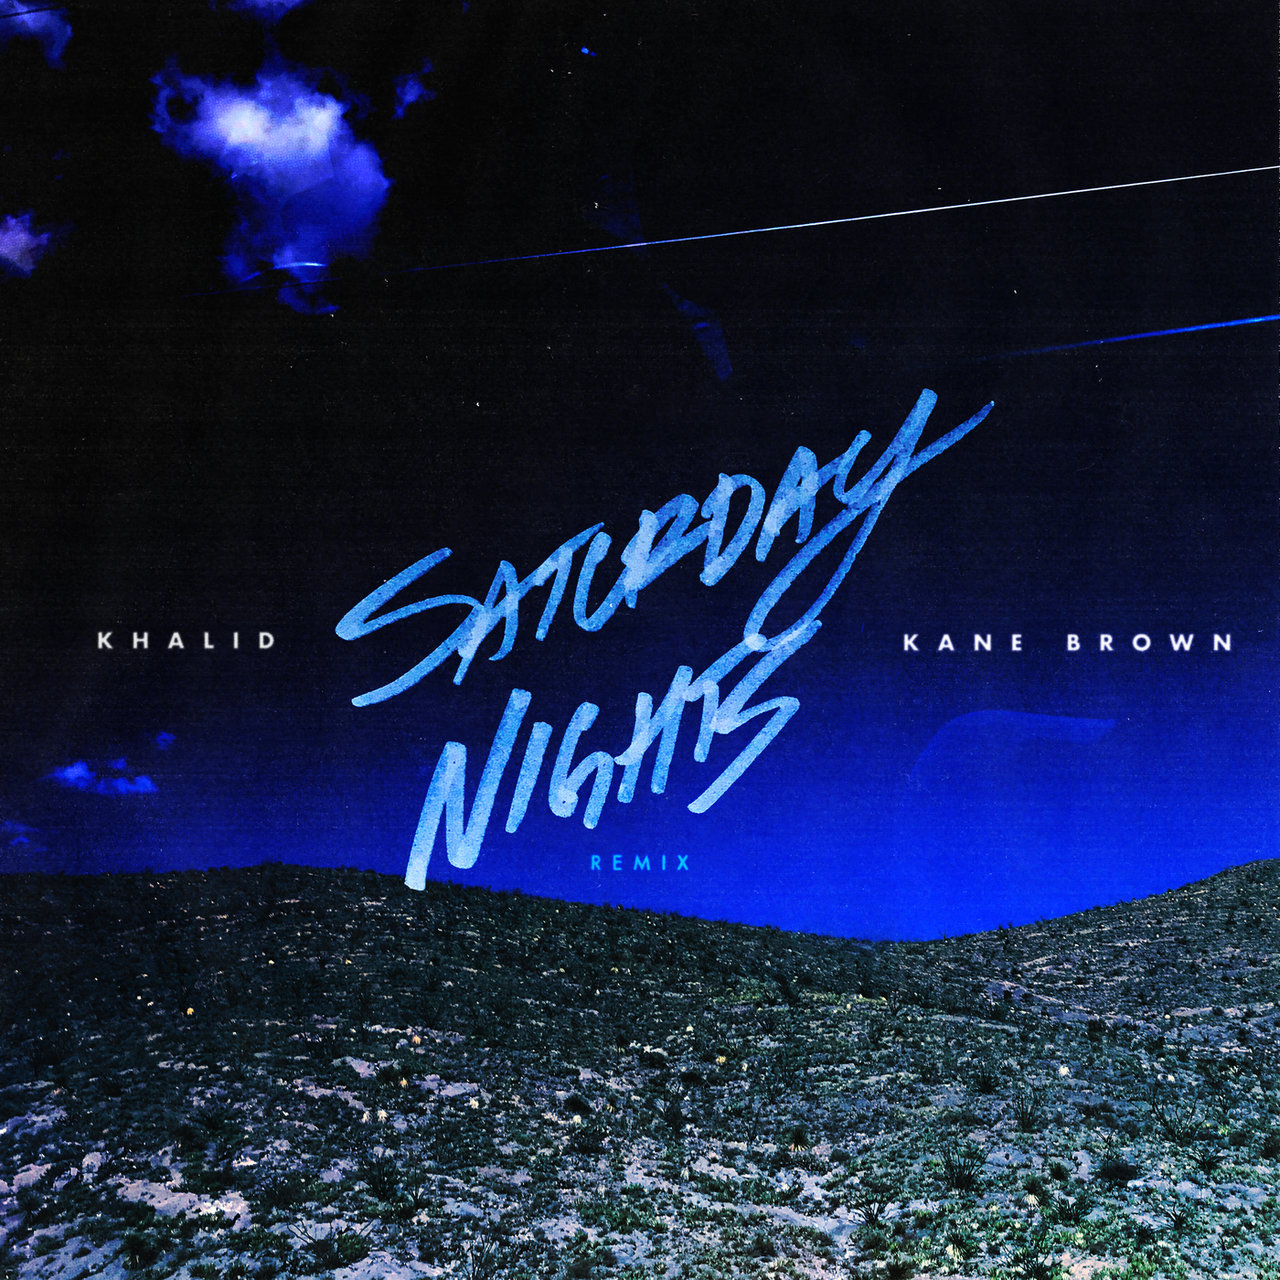 Khalid & Kane Brown — Saturday Nights REMIX cover artwork